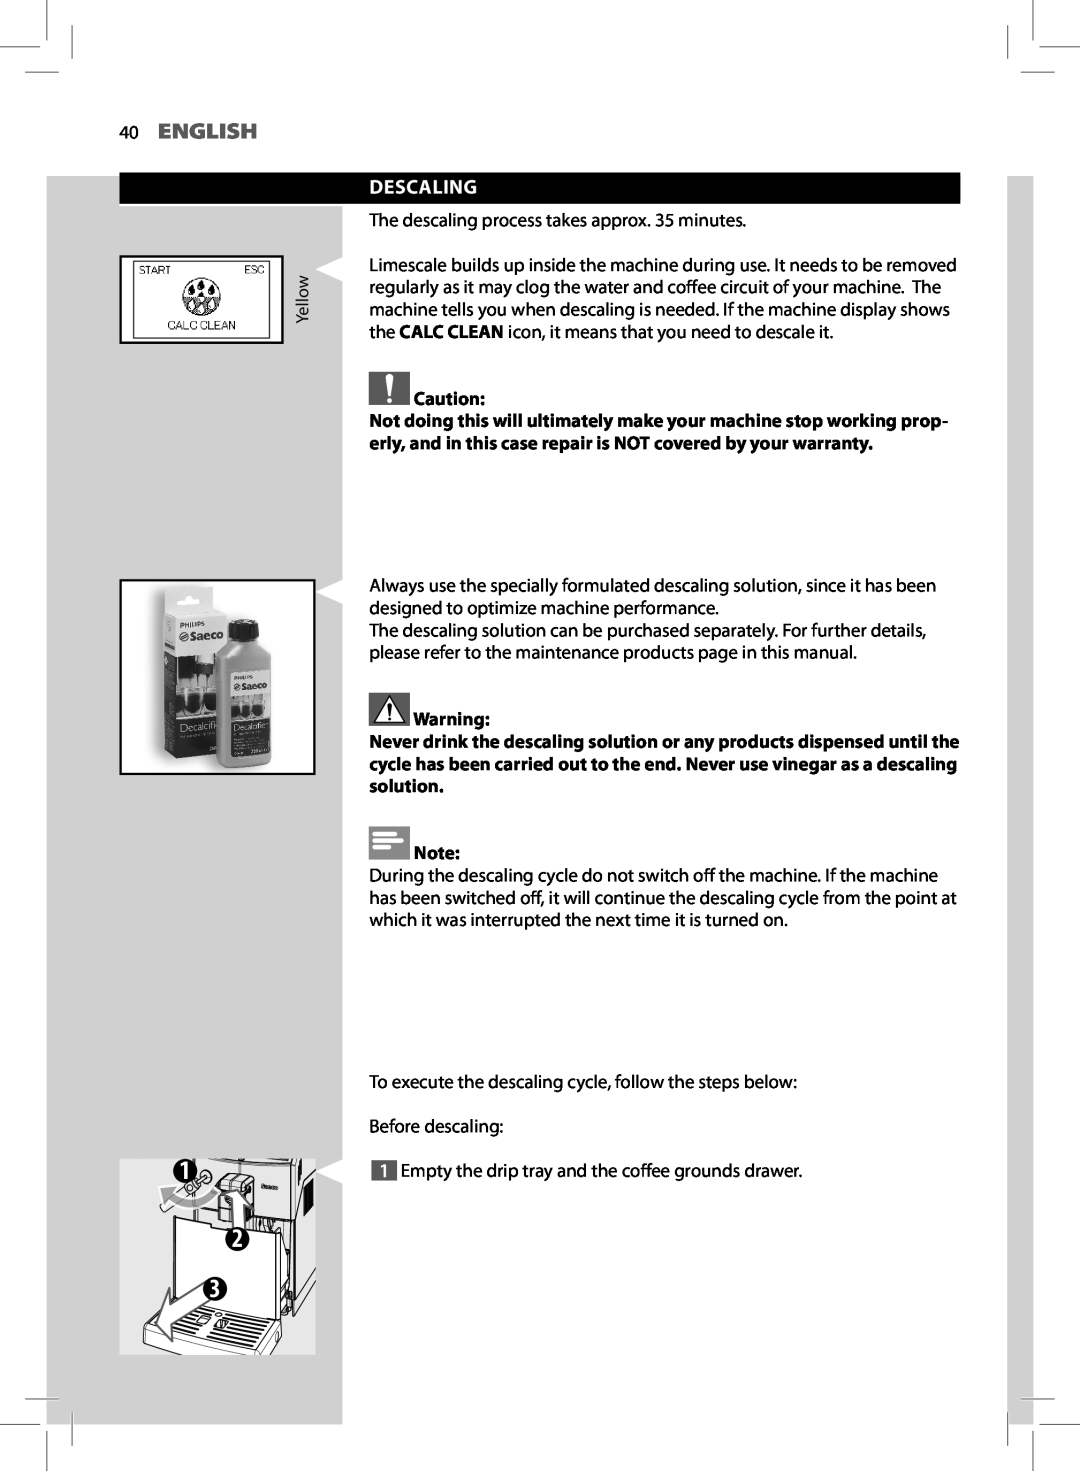 Saeco Coffee Makers HD8775 user manual 40ENGLISH, Descaling 